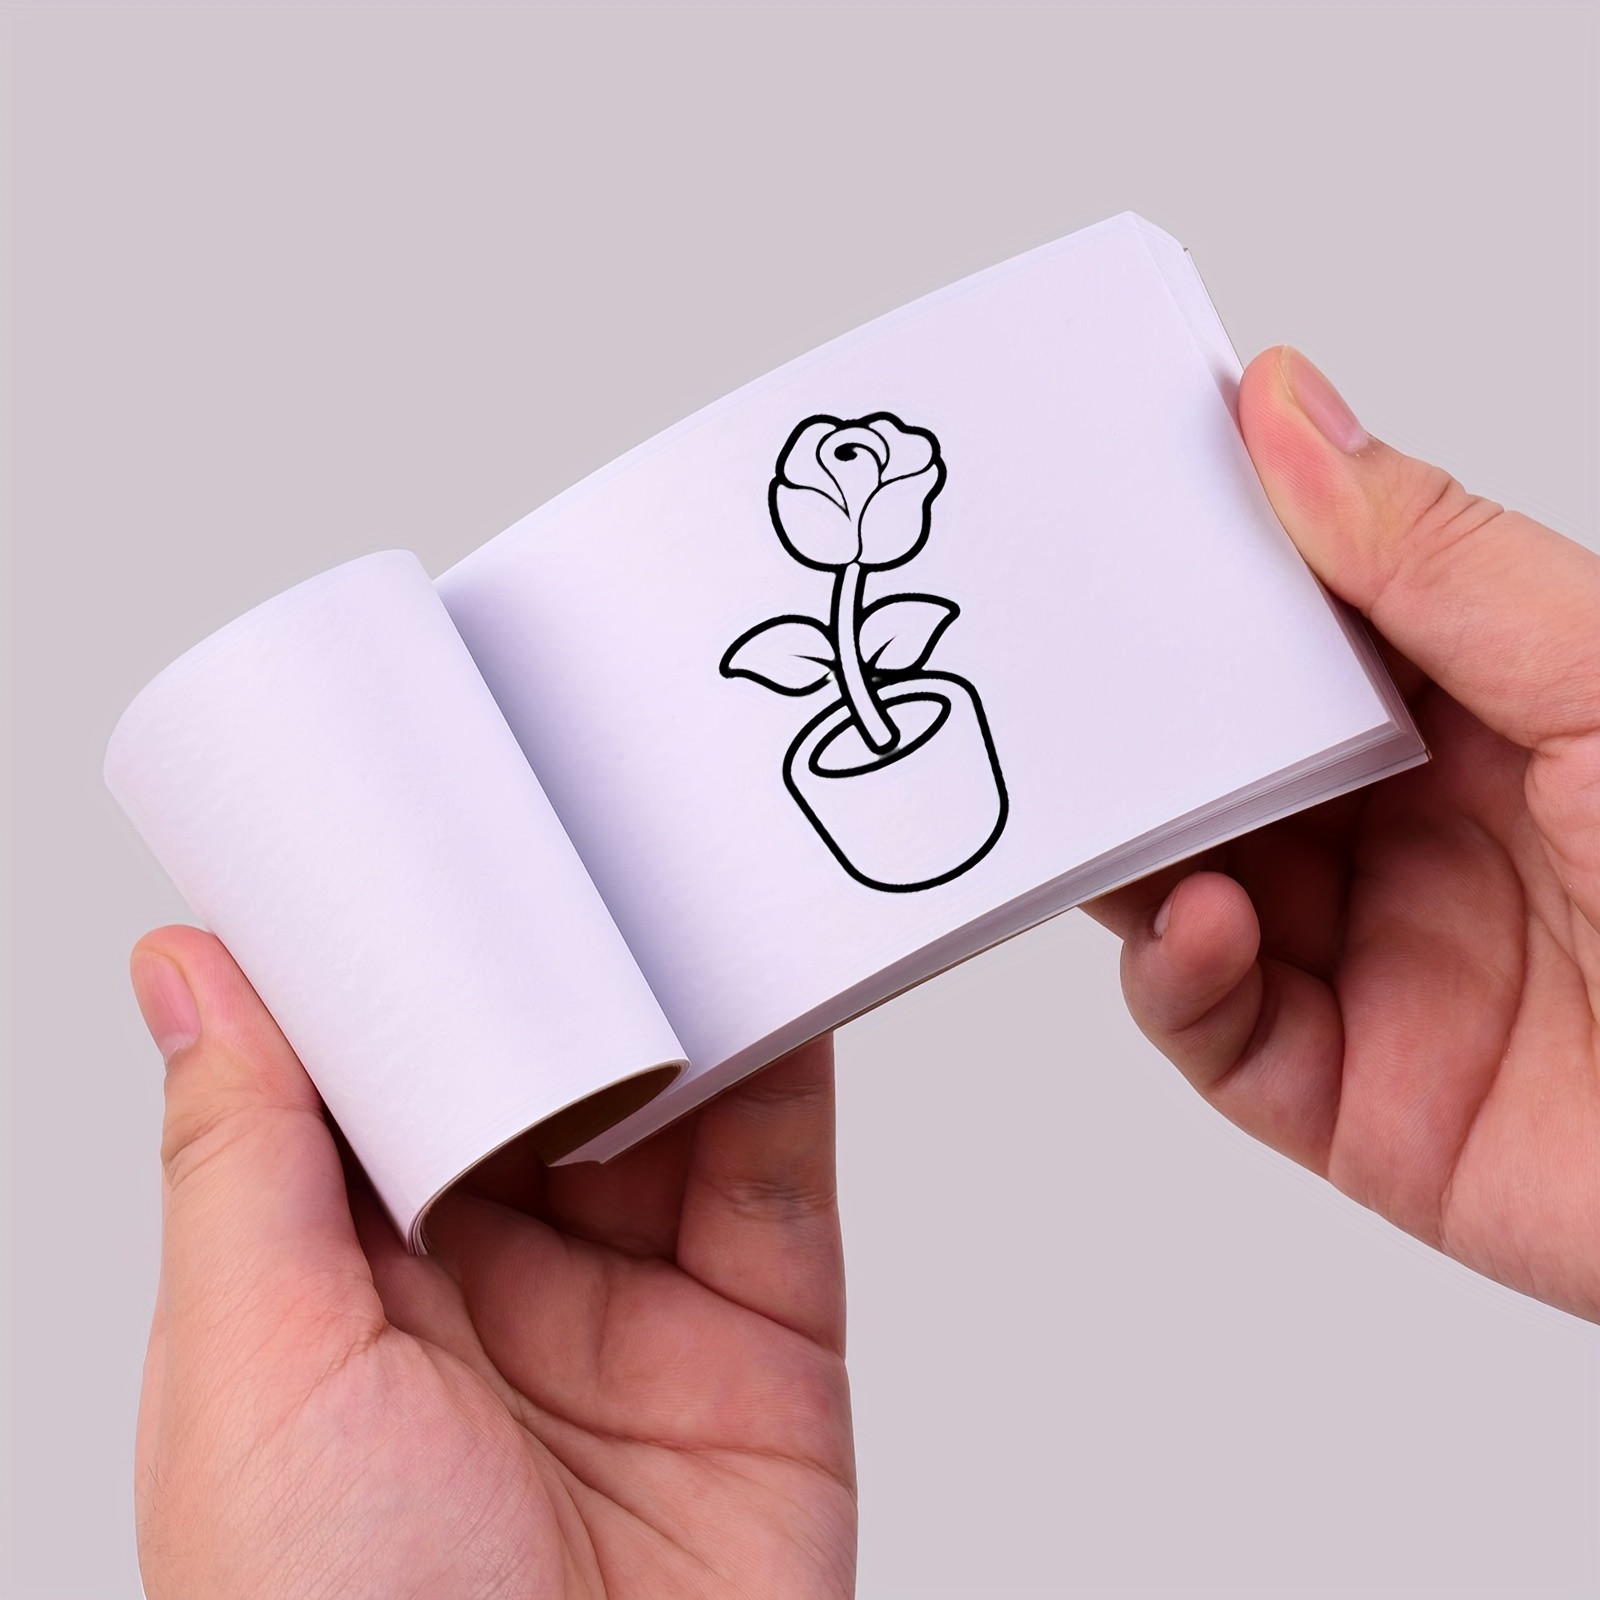  Flipboku - Flip Book Kit for Learning Animation - 2